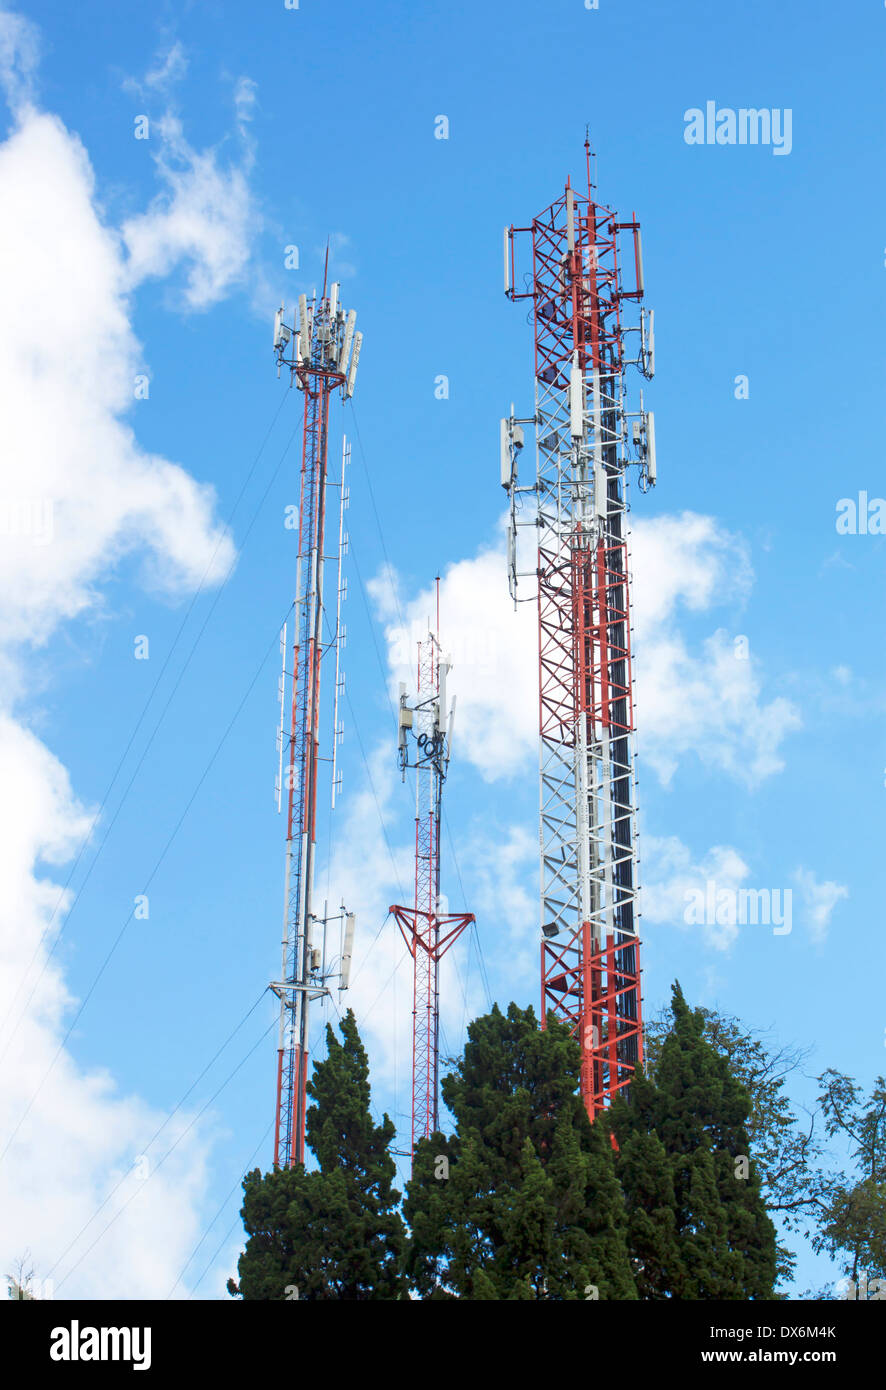 Kommunikation Turm Funksignal Mast und den dunklen Himmel. Stockfoto